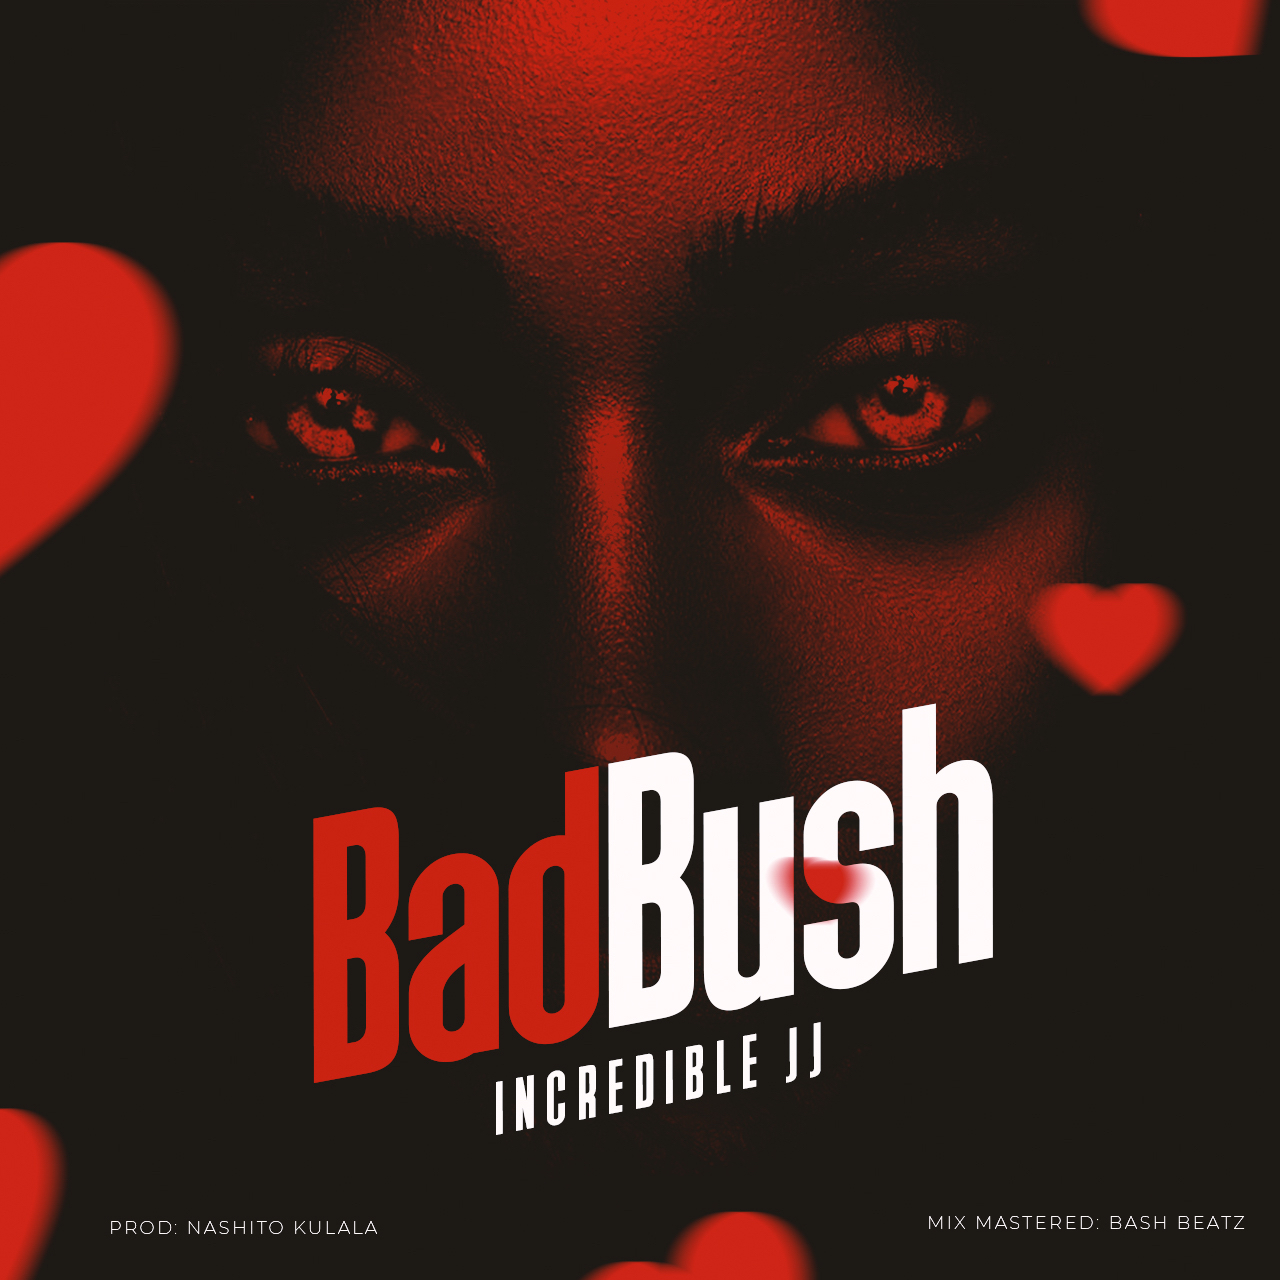 Incredible JJ – Bad Bush